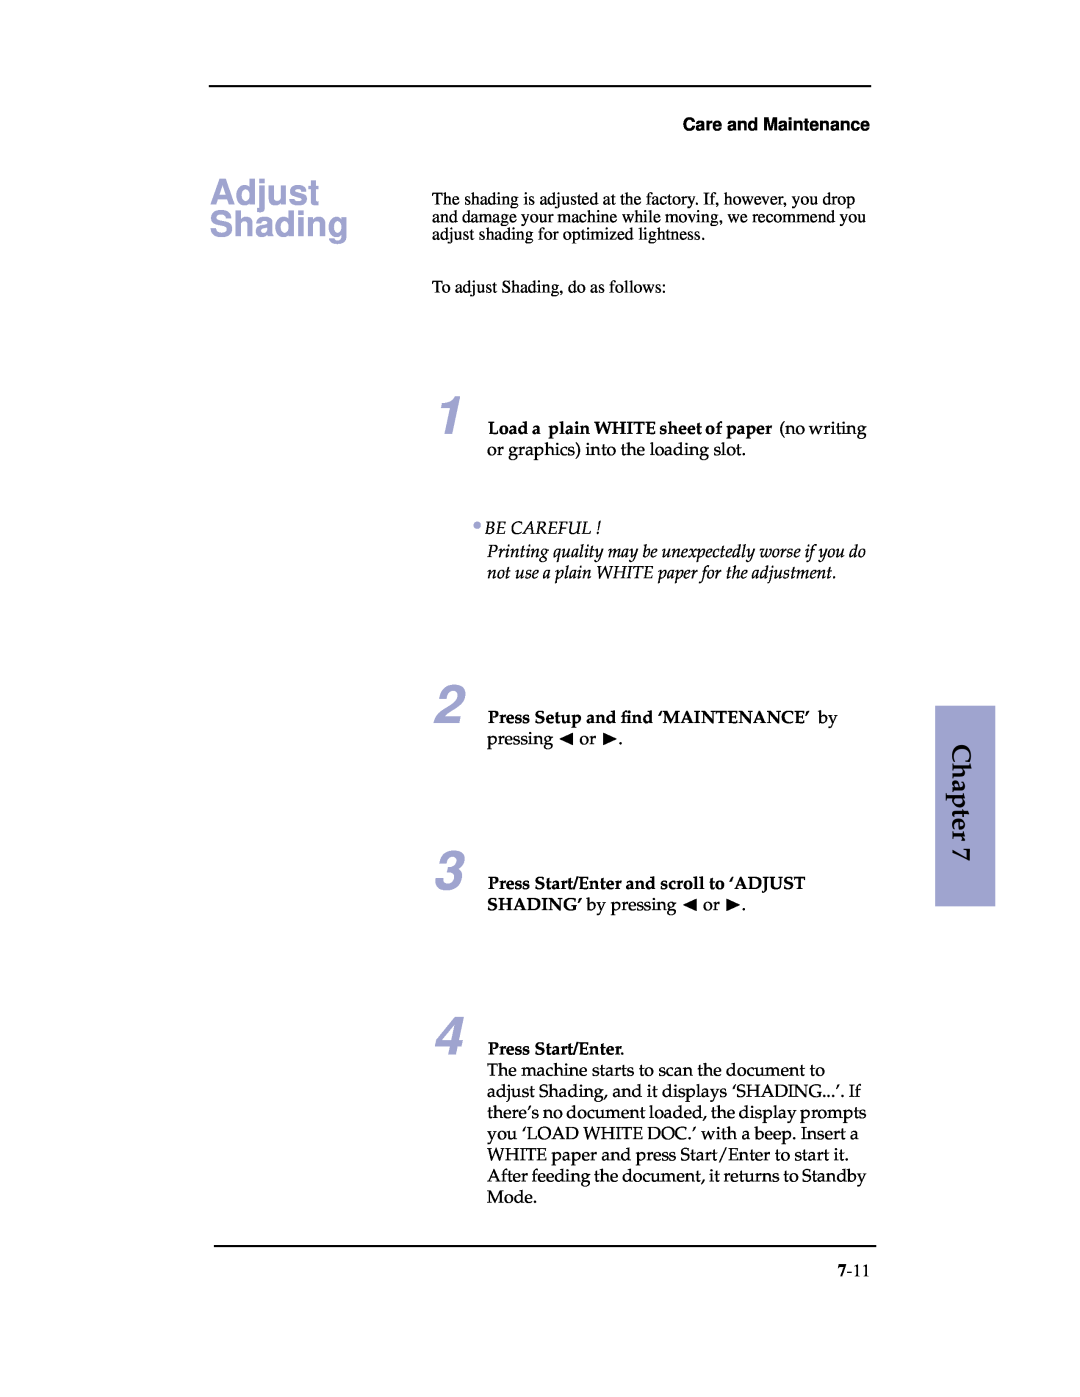 Samsung SF-3100 manual Adjust Shading, Press Setup and ﬁnd ‘MAINTENANCE’ by pressing or ❿, Press Start/Enter, Chapter 